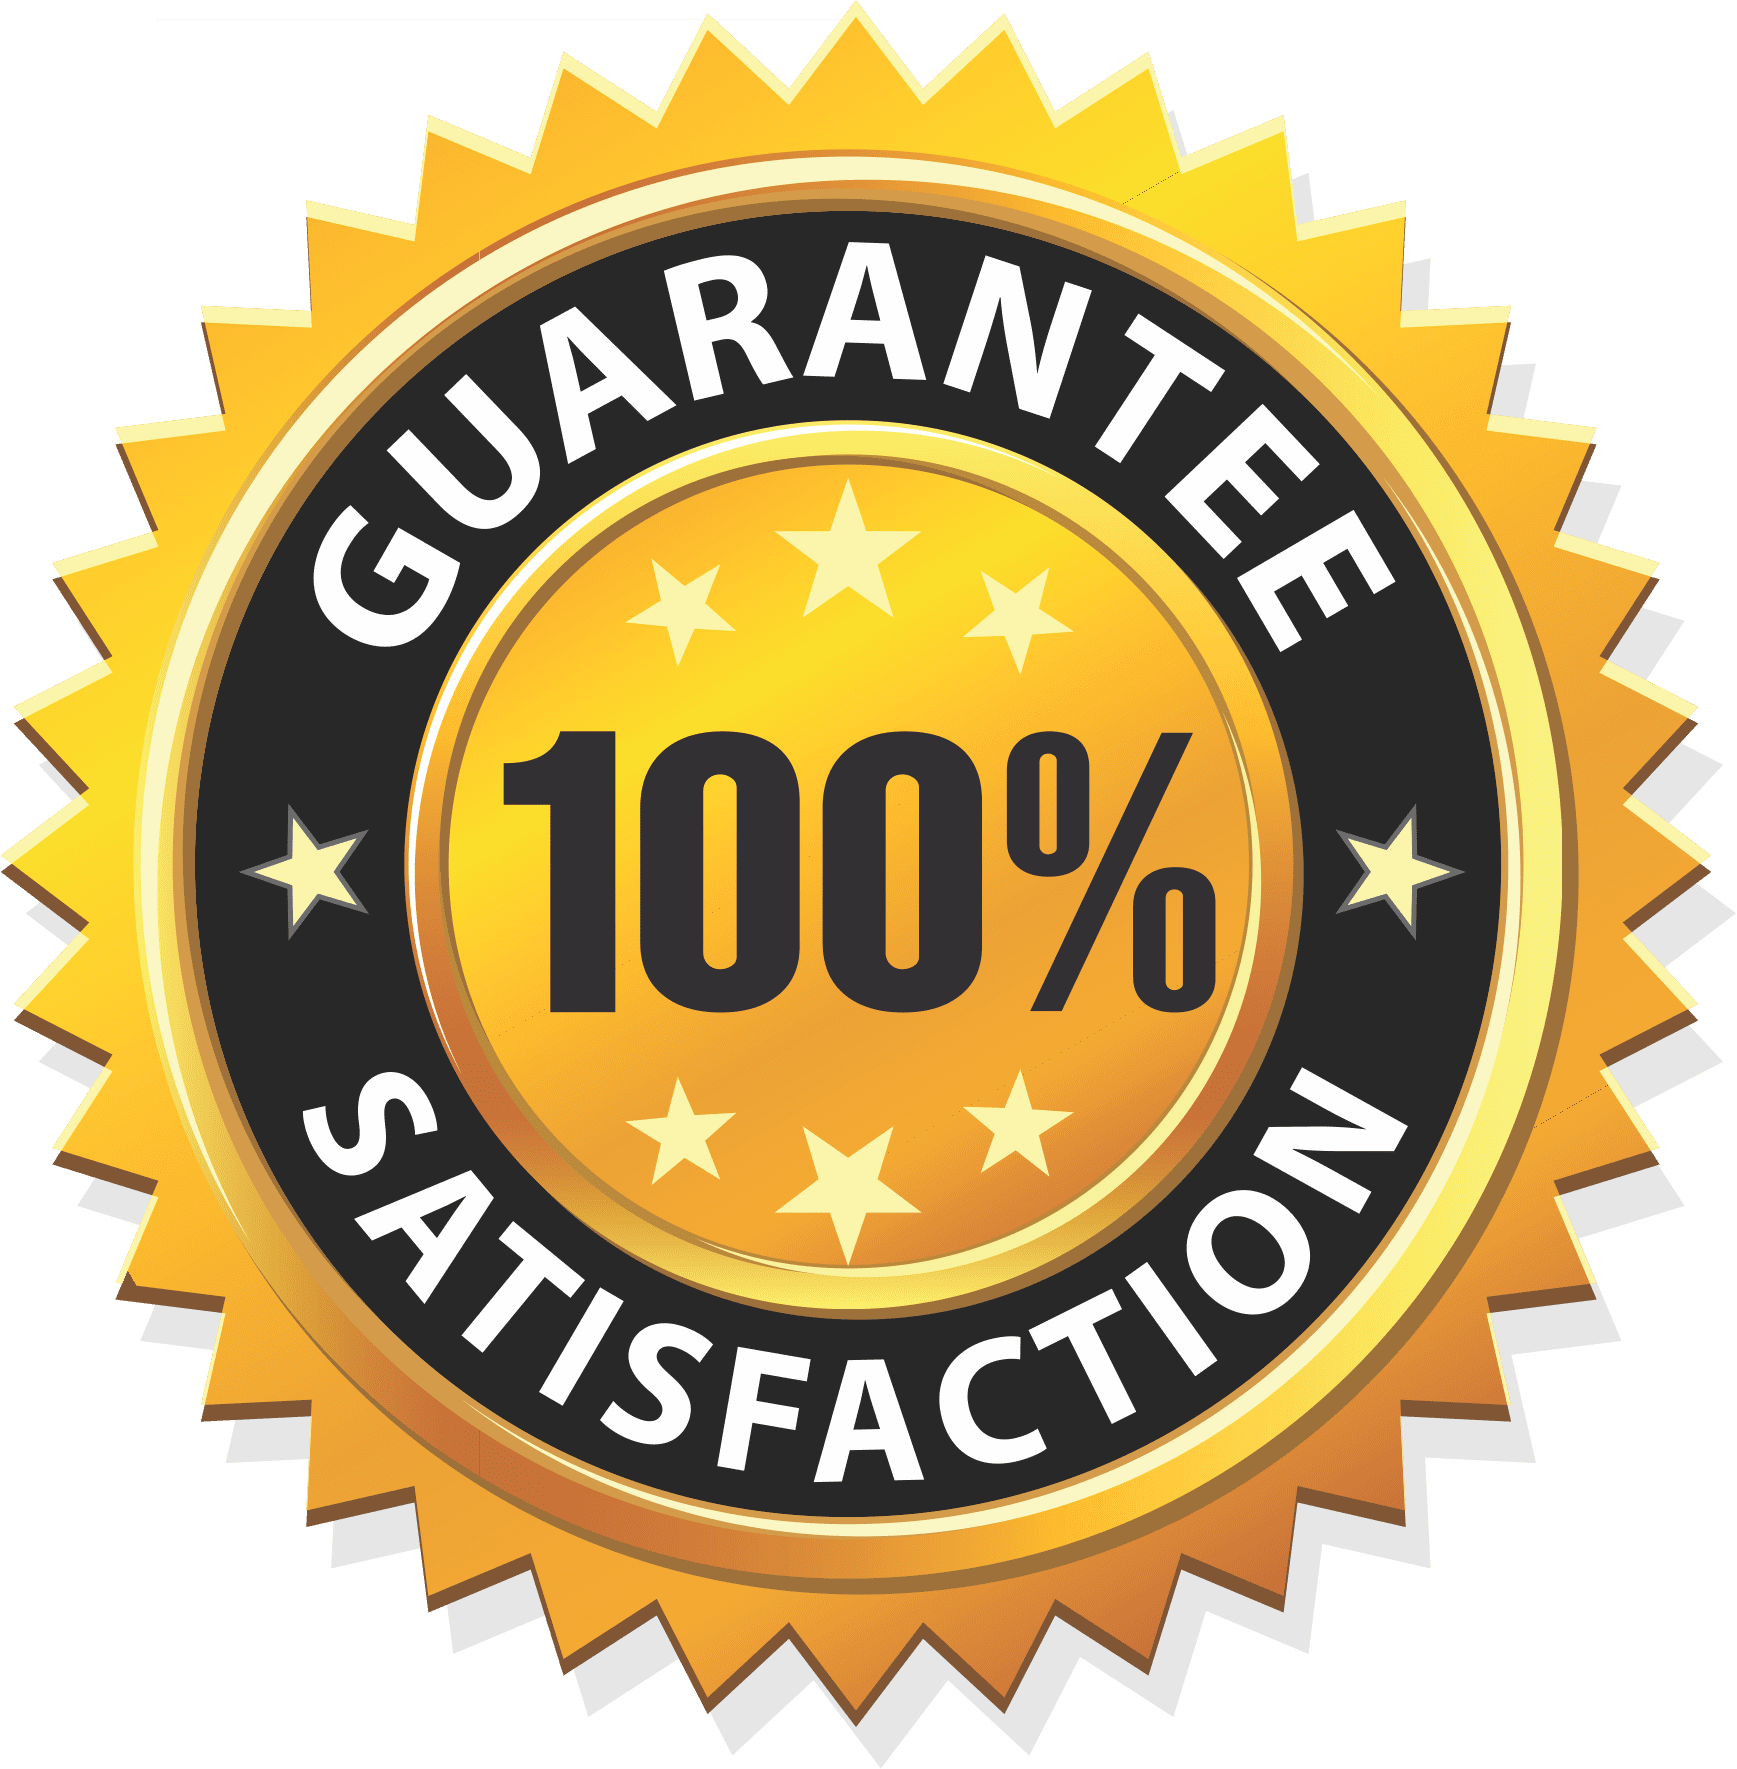 guarantee 100% satisfaction